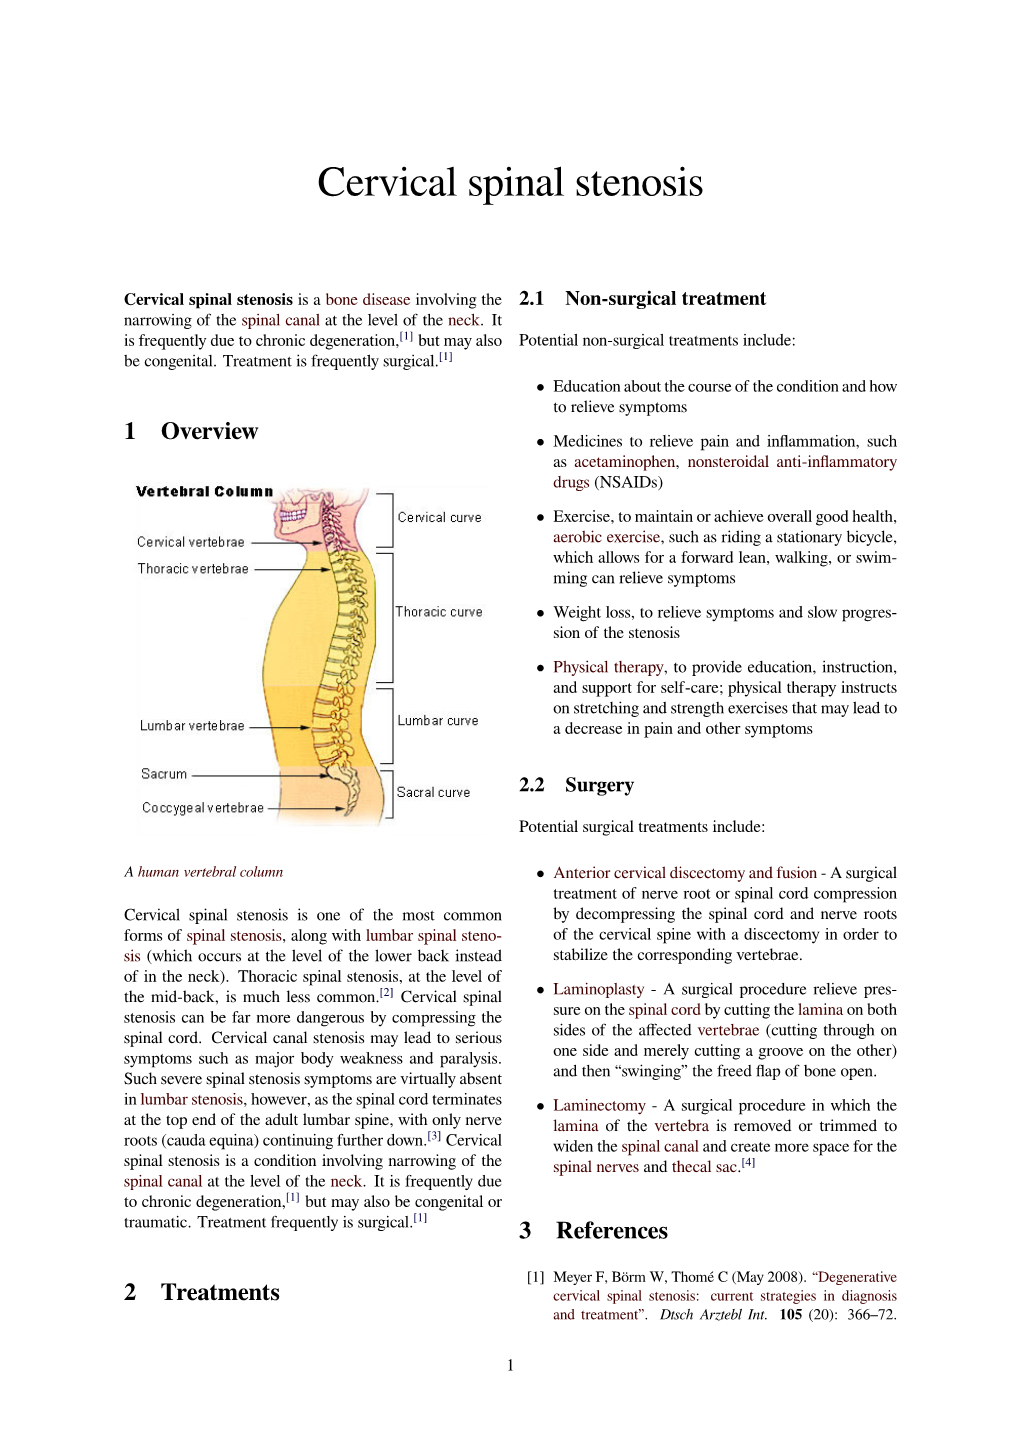 Cervical Spinal Stenosis